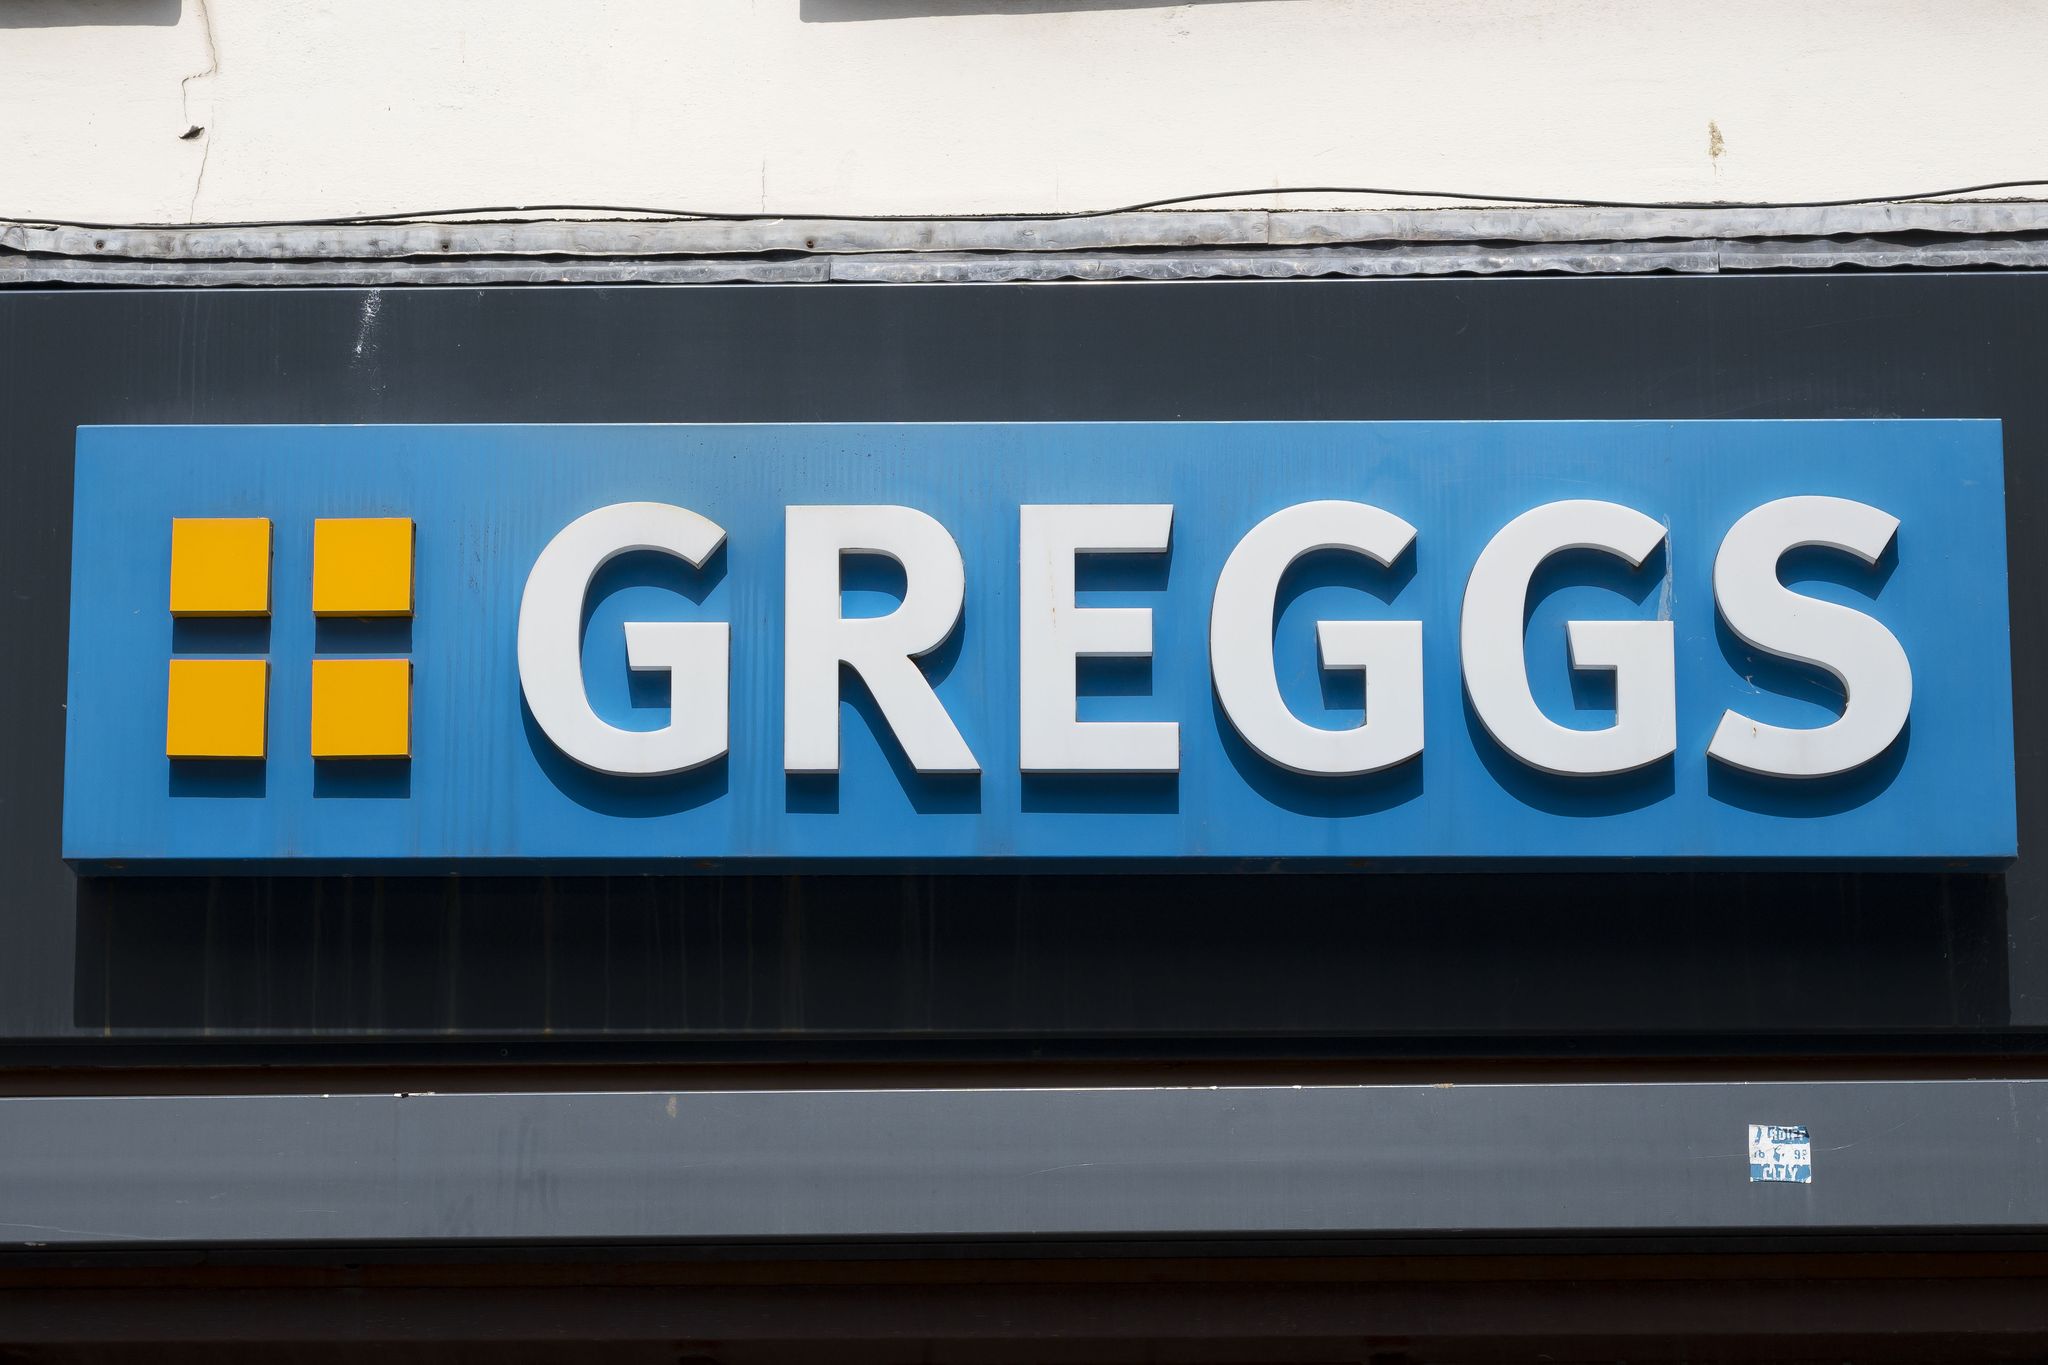 Distraught vegan offered £2 refund after Greggs serves her pork sausage roll